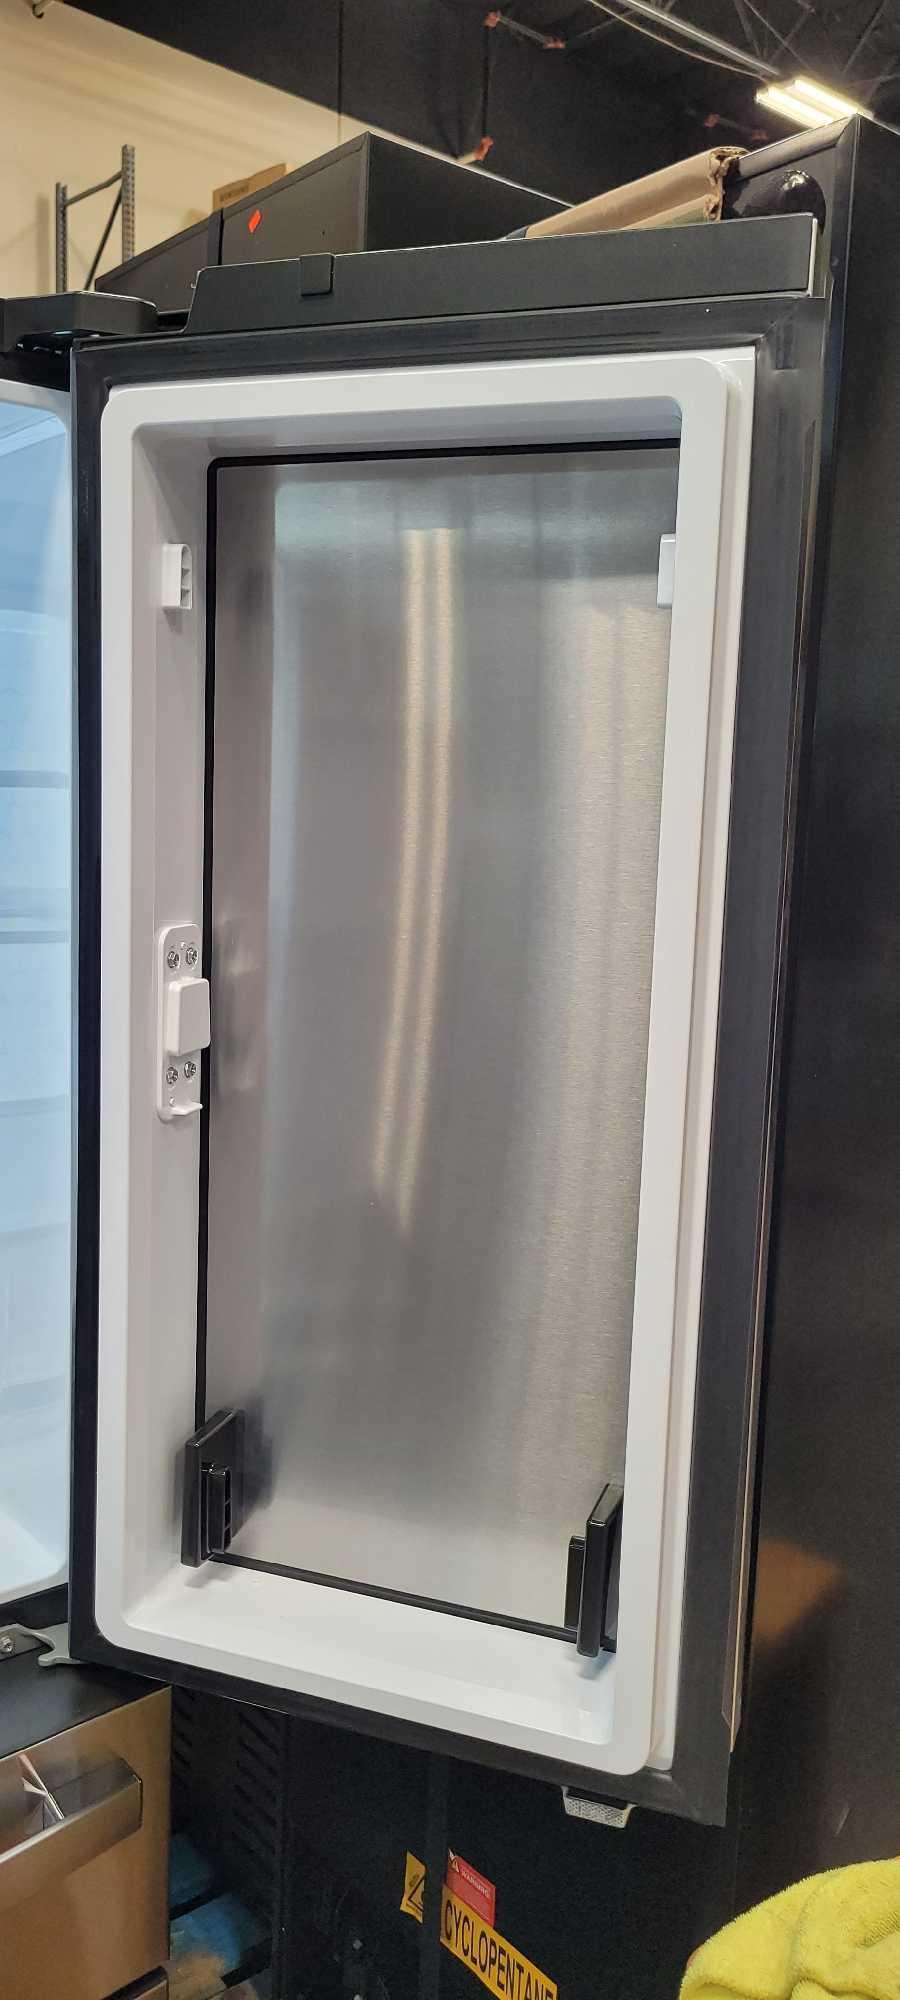 GE Profile 27.9 cu. ft. Smart 4-Door French Door Refrigerator*PREVIOUSLY INSTALLED*